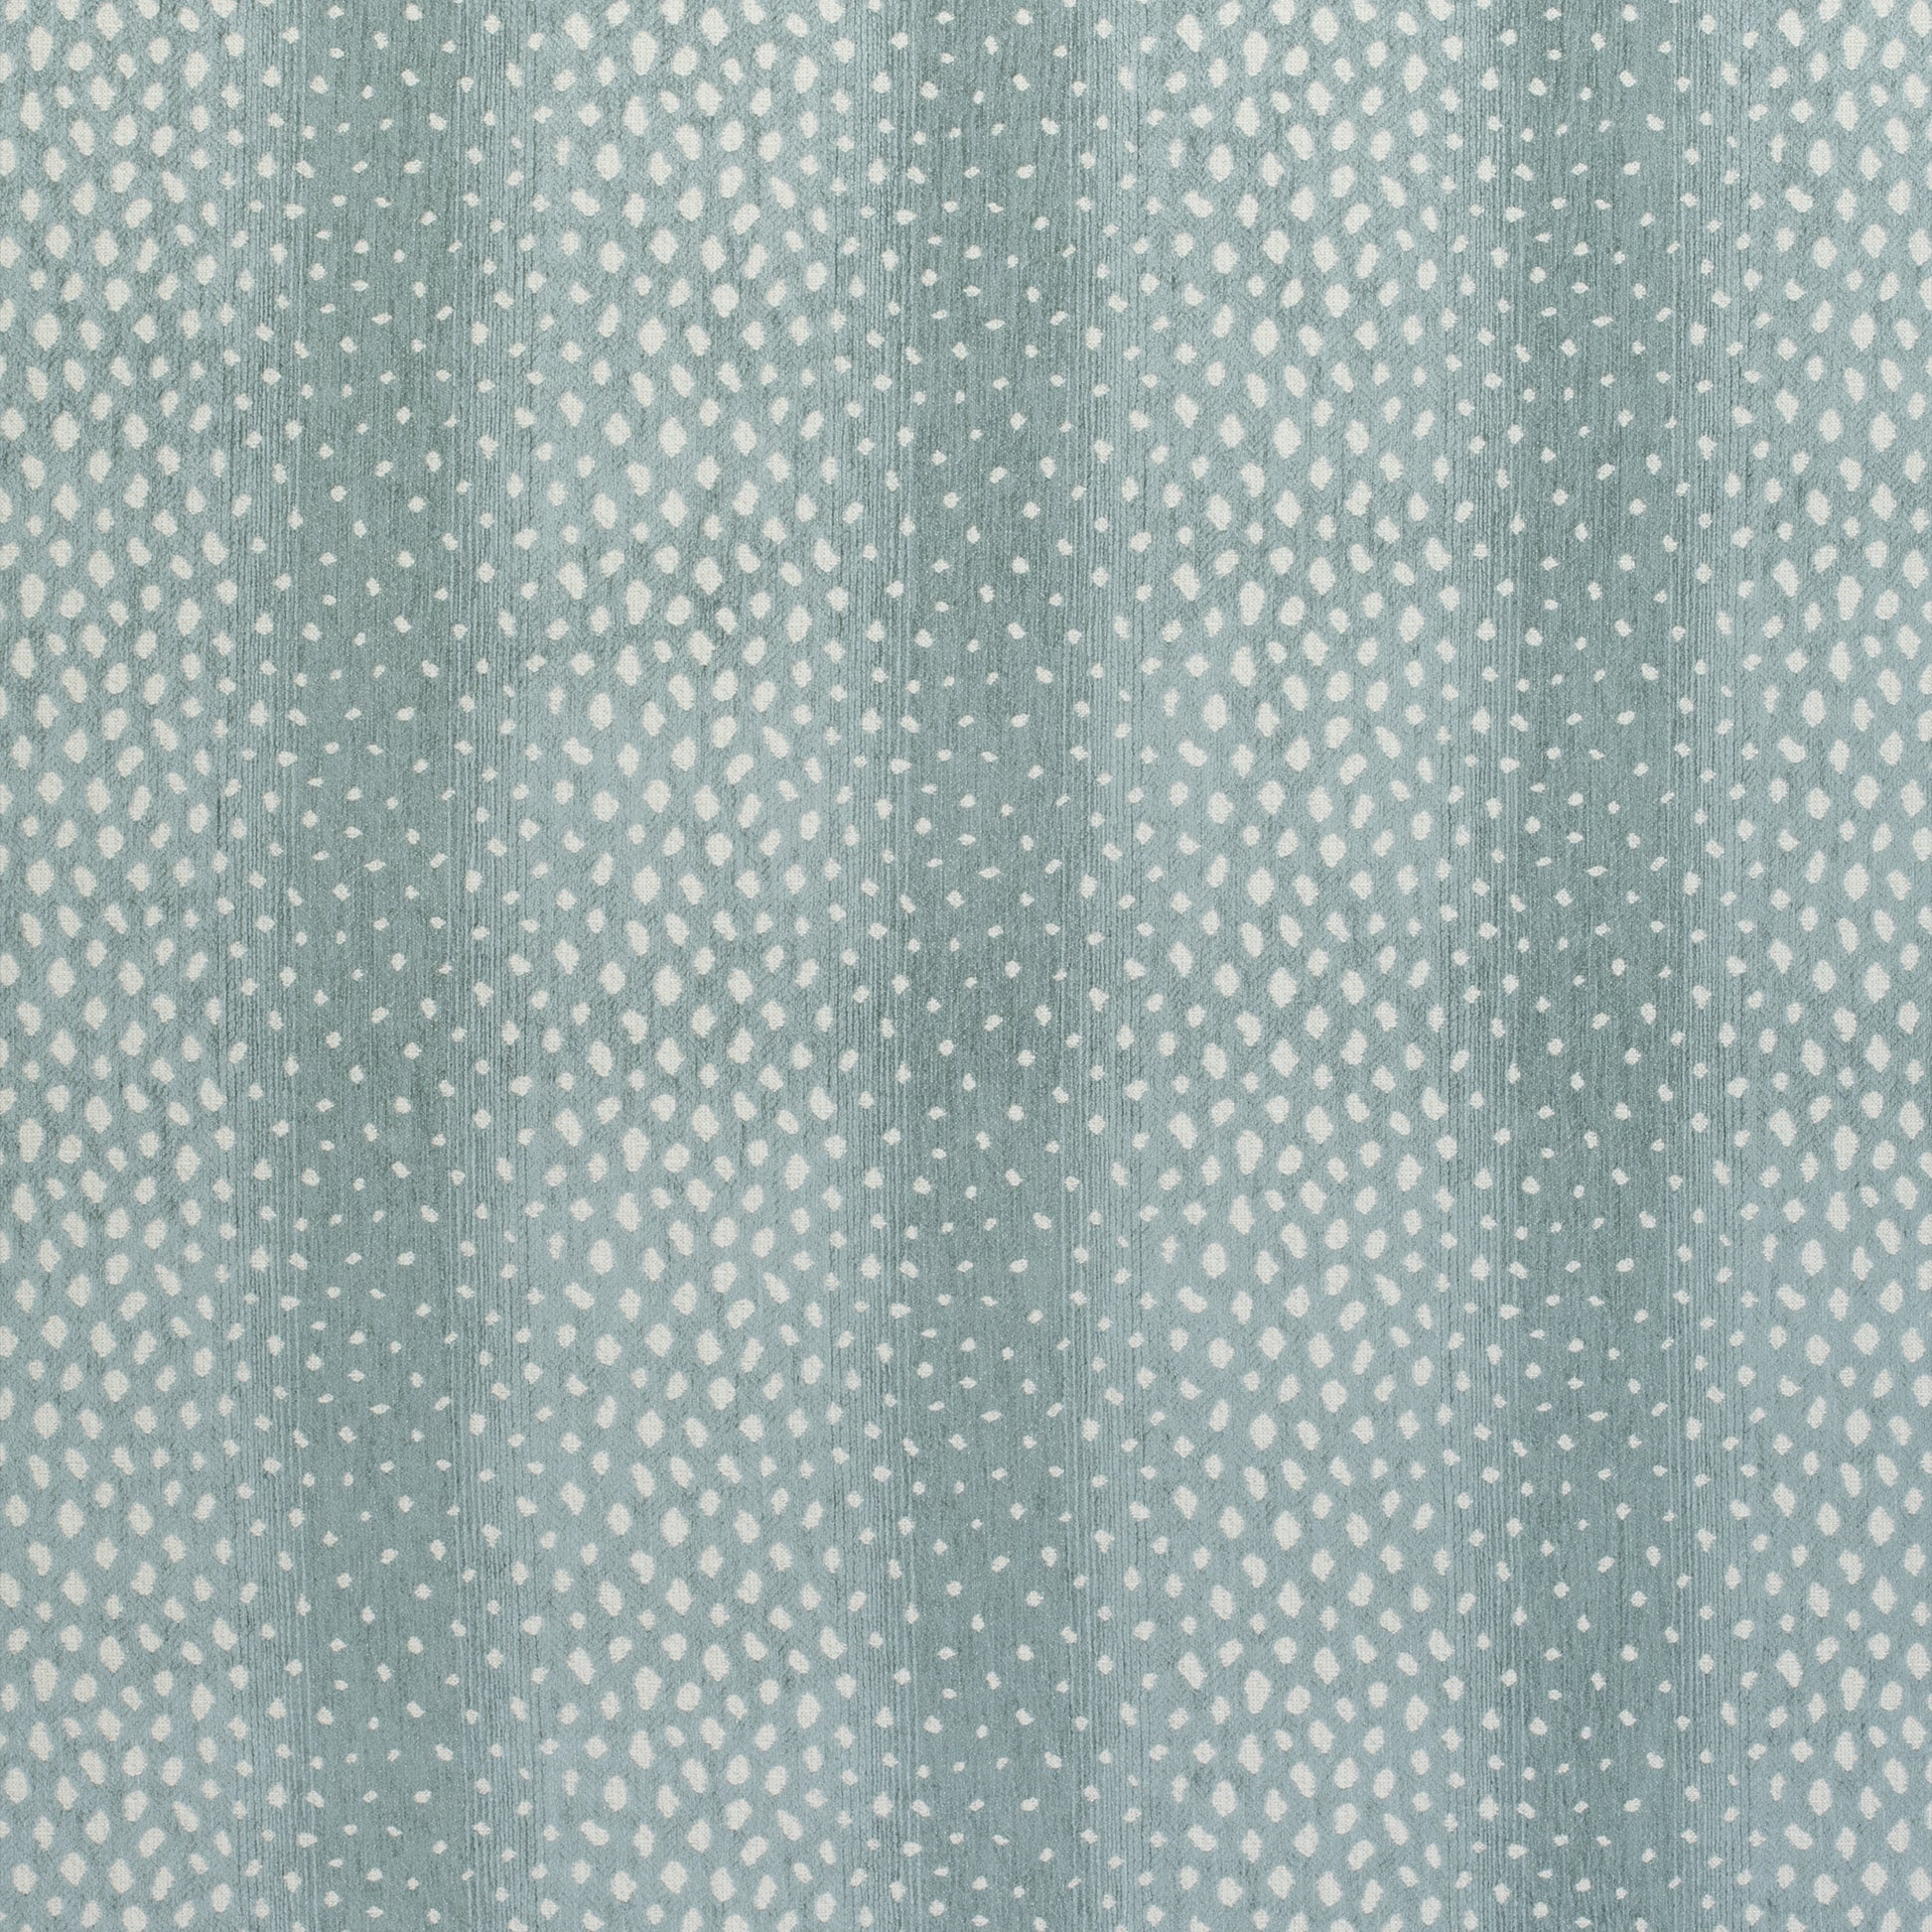 Purchase Thibaut Fabric Product# W80429 pattern name Gazelle color Aqua